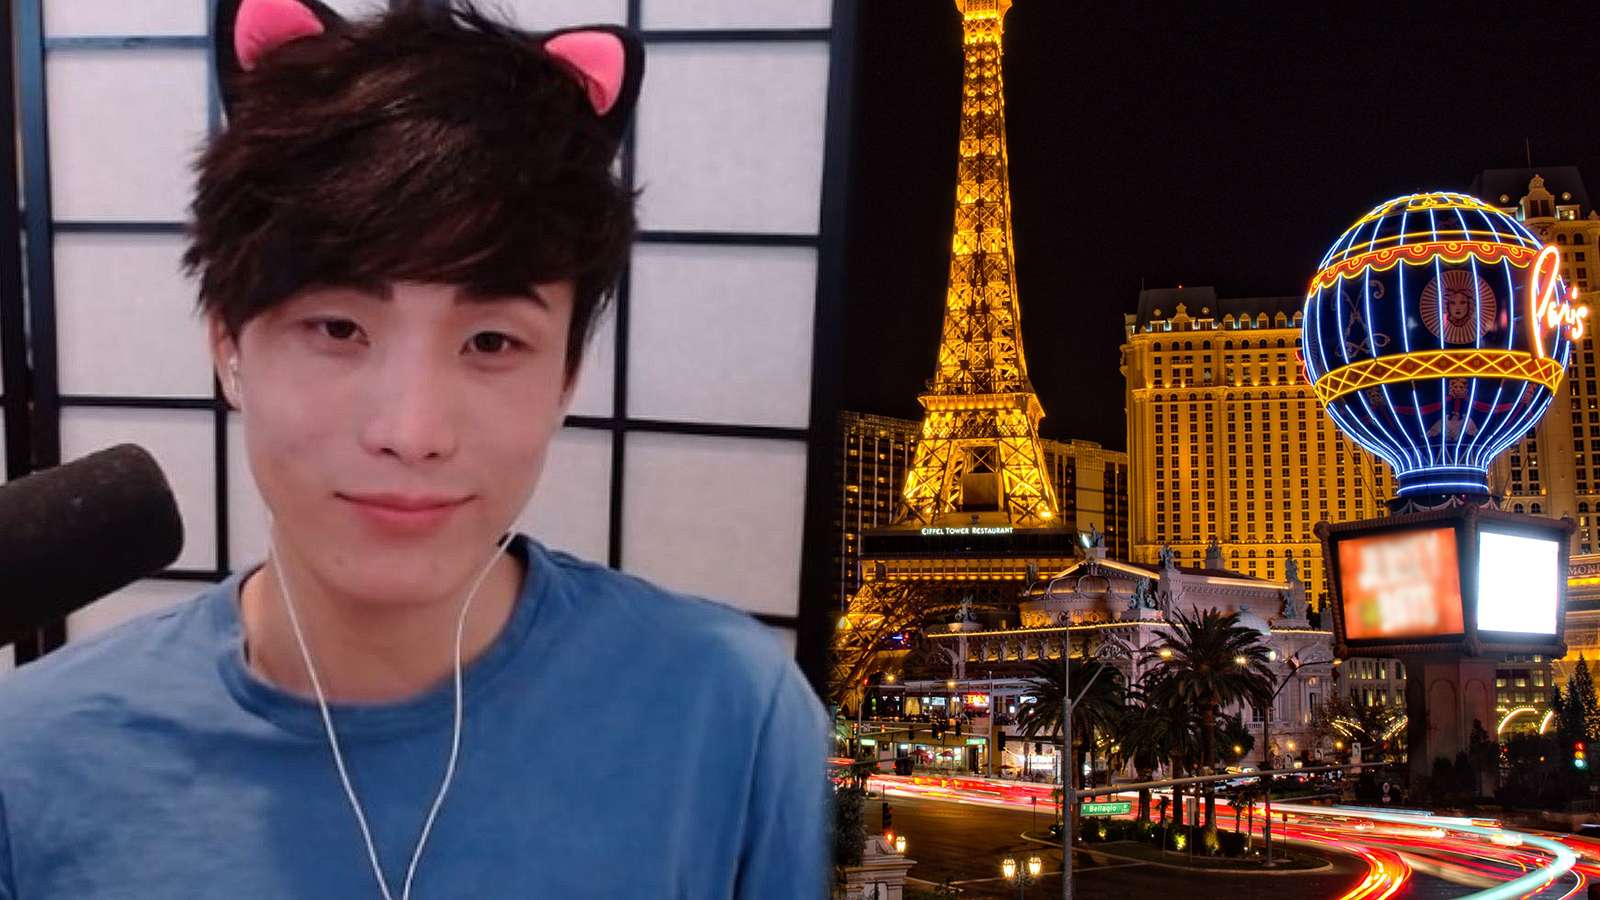 Sykkuno reveals he's moving to Las Vegas